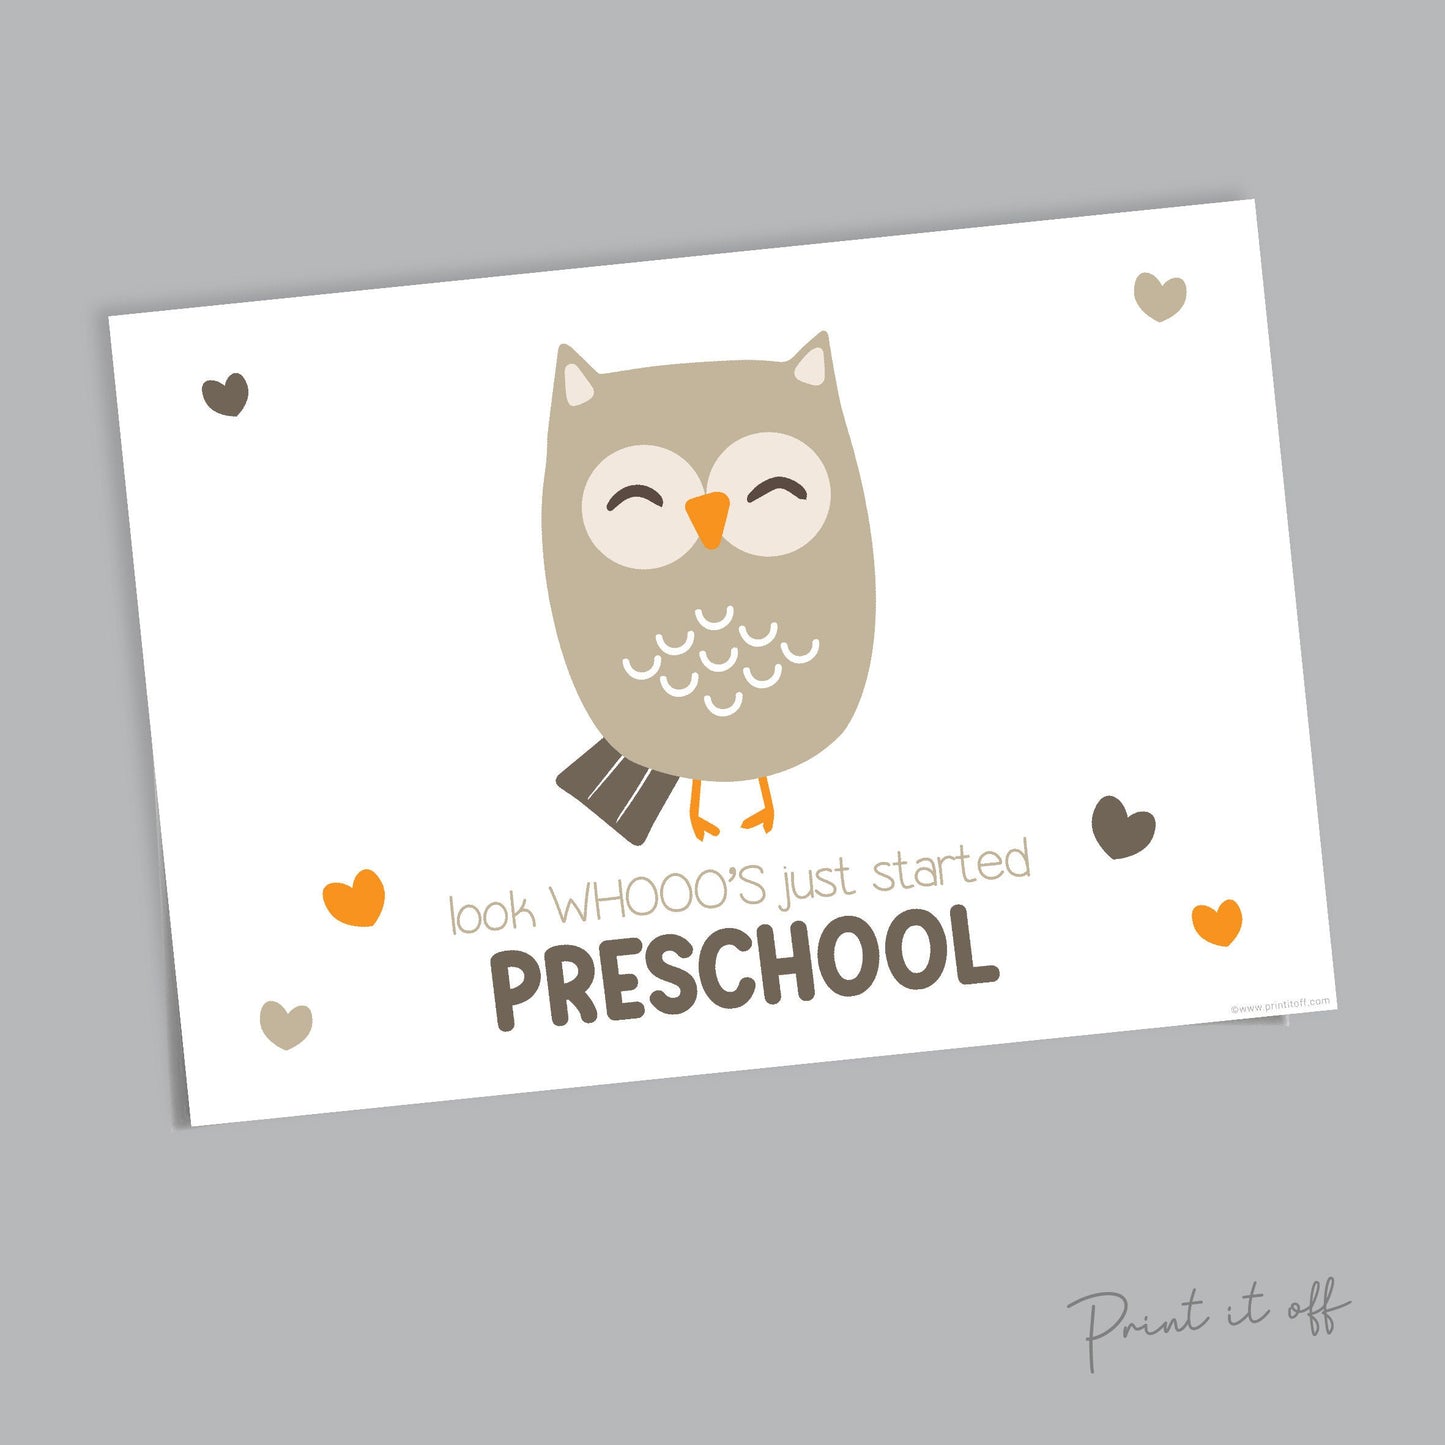 PreSchool Handprint Art Owl / Hand Hands / First Day Starting School Pre-School / Child Kids Teacher / Craft DIY Print It Off Memory 0551